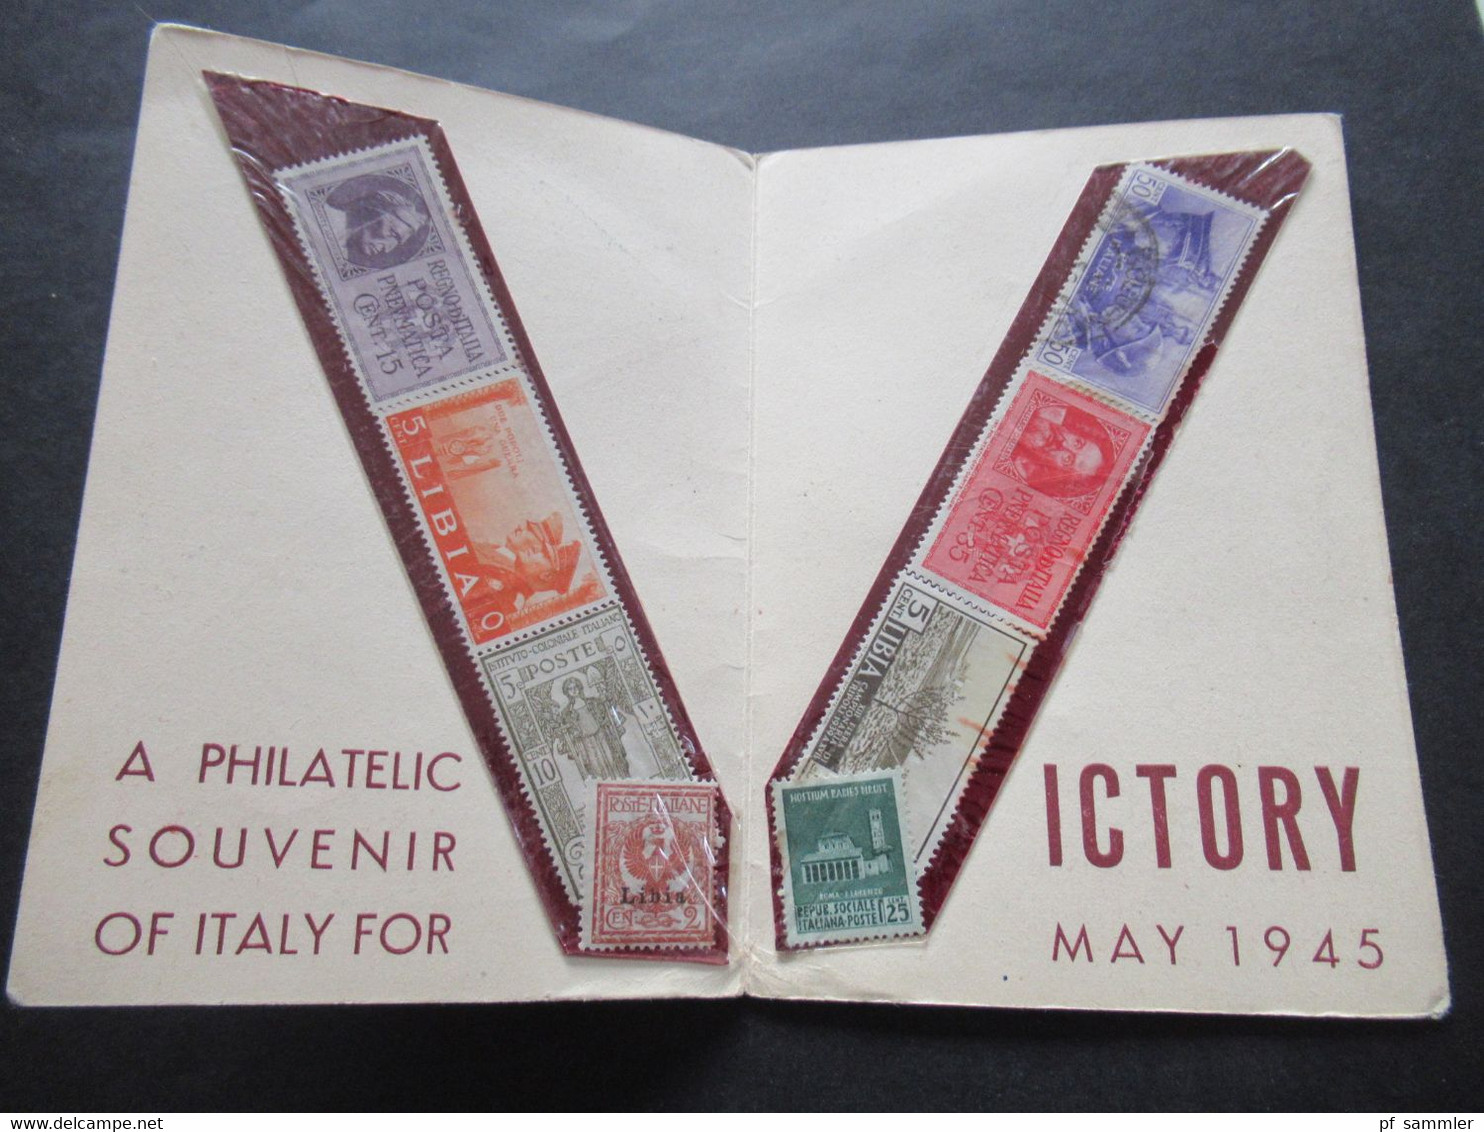 Klappkarte Mai 1945 Britische Propaganda Britisch Forces In Italy A Philatelic Souvenir Of Italy For Victory May 1945 - Kriegspropaganda